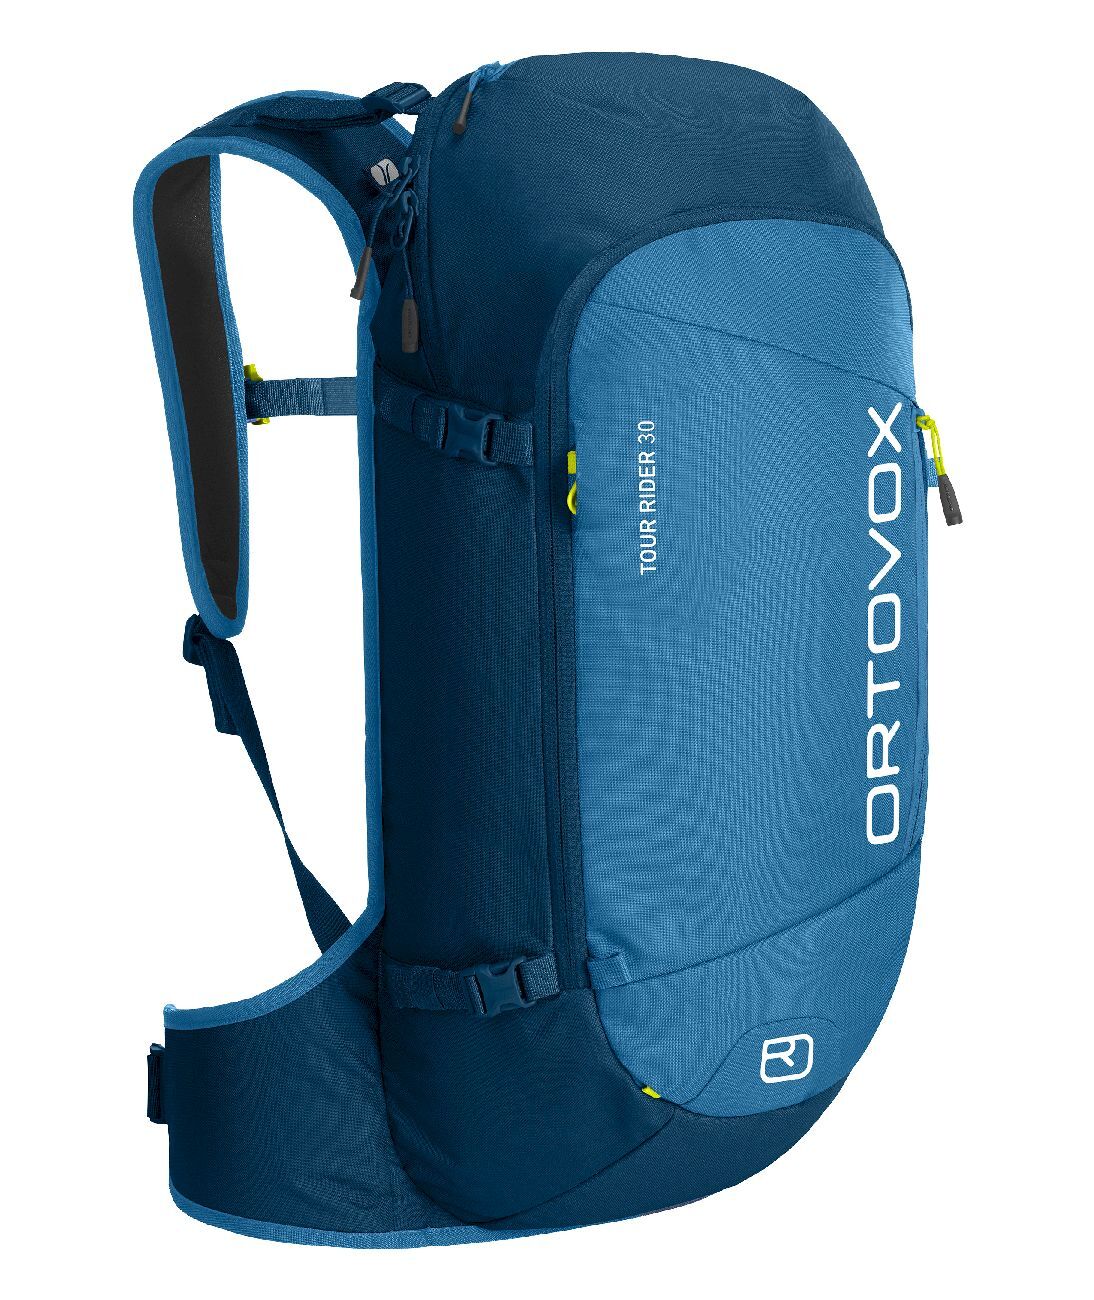 Ortovox Tour Rider 30 - Ski backpack